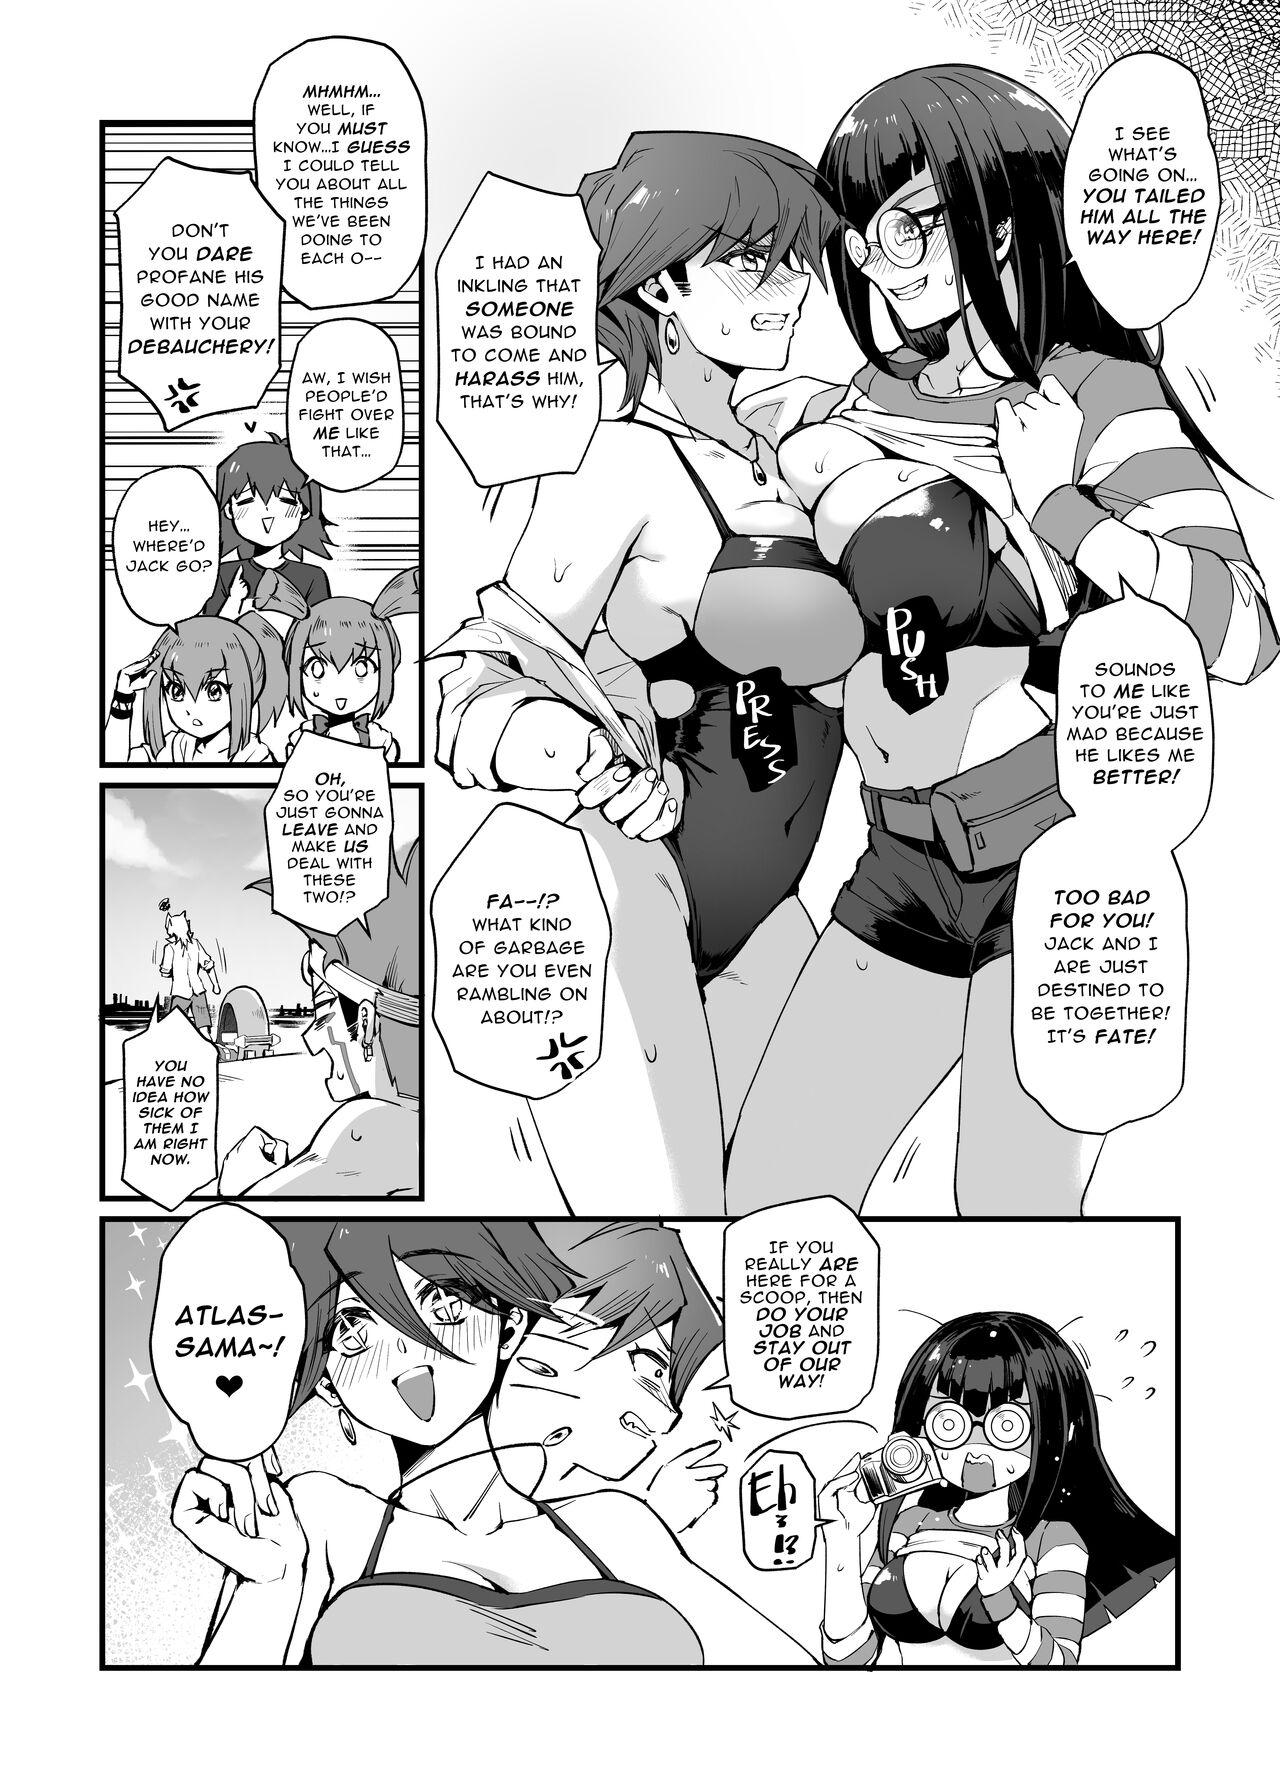 Ex Girlfriend Samakani - Yu gi oh 5ds Gay Bareback - Page 5